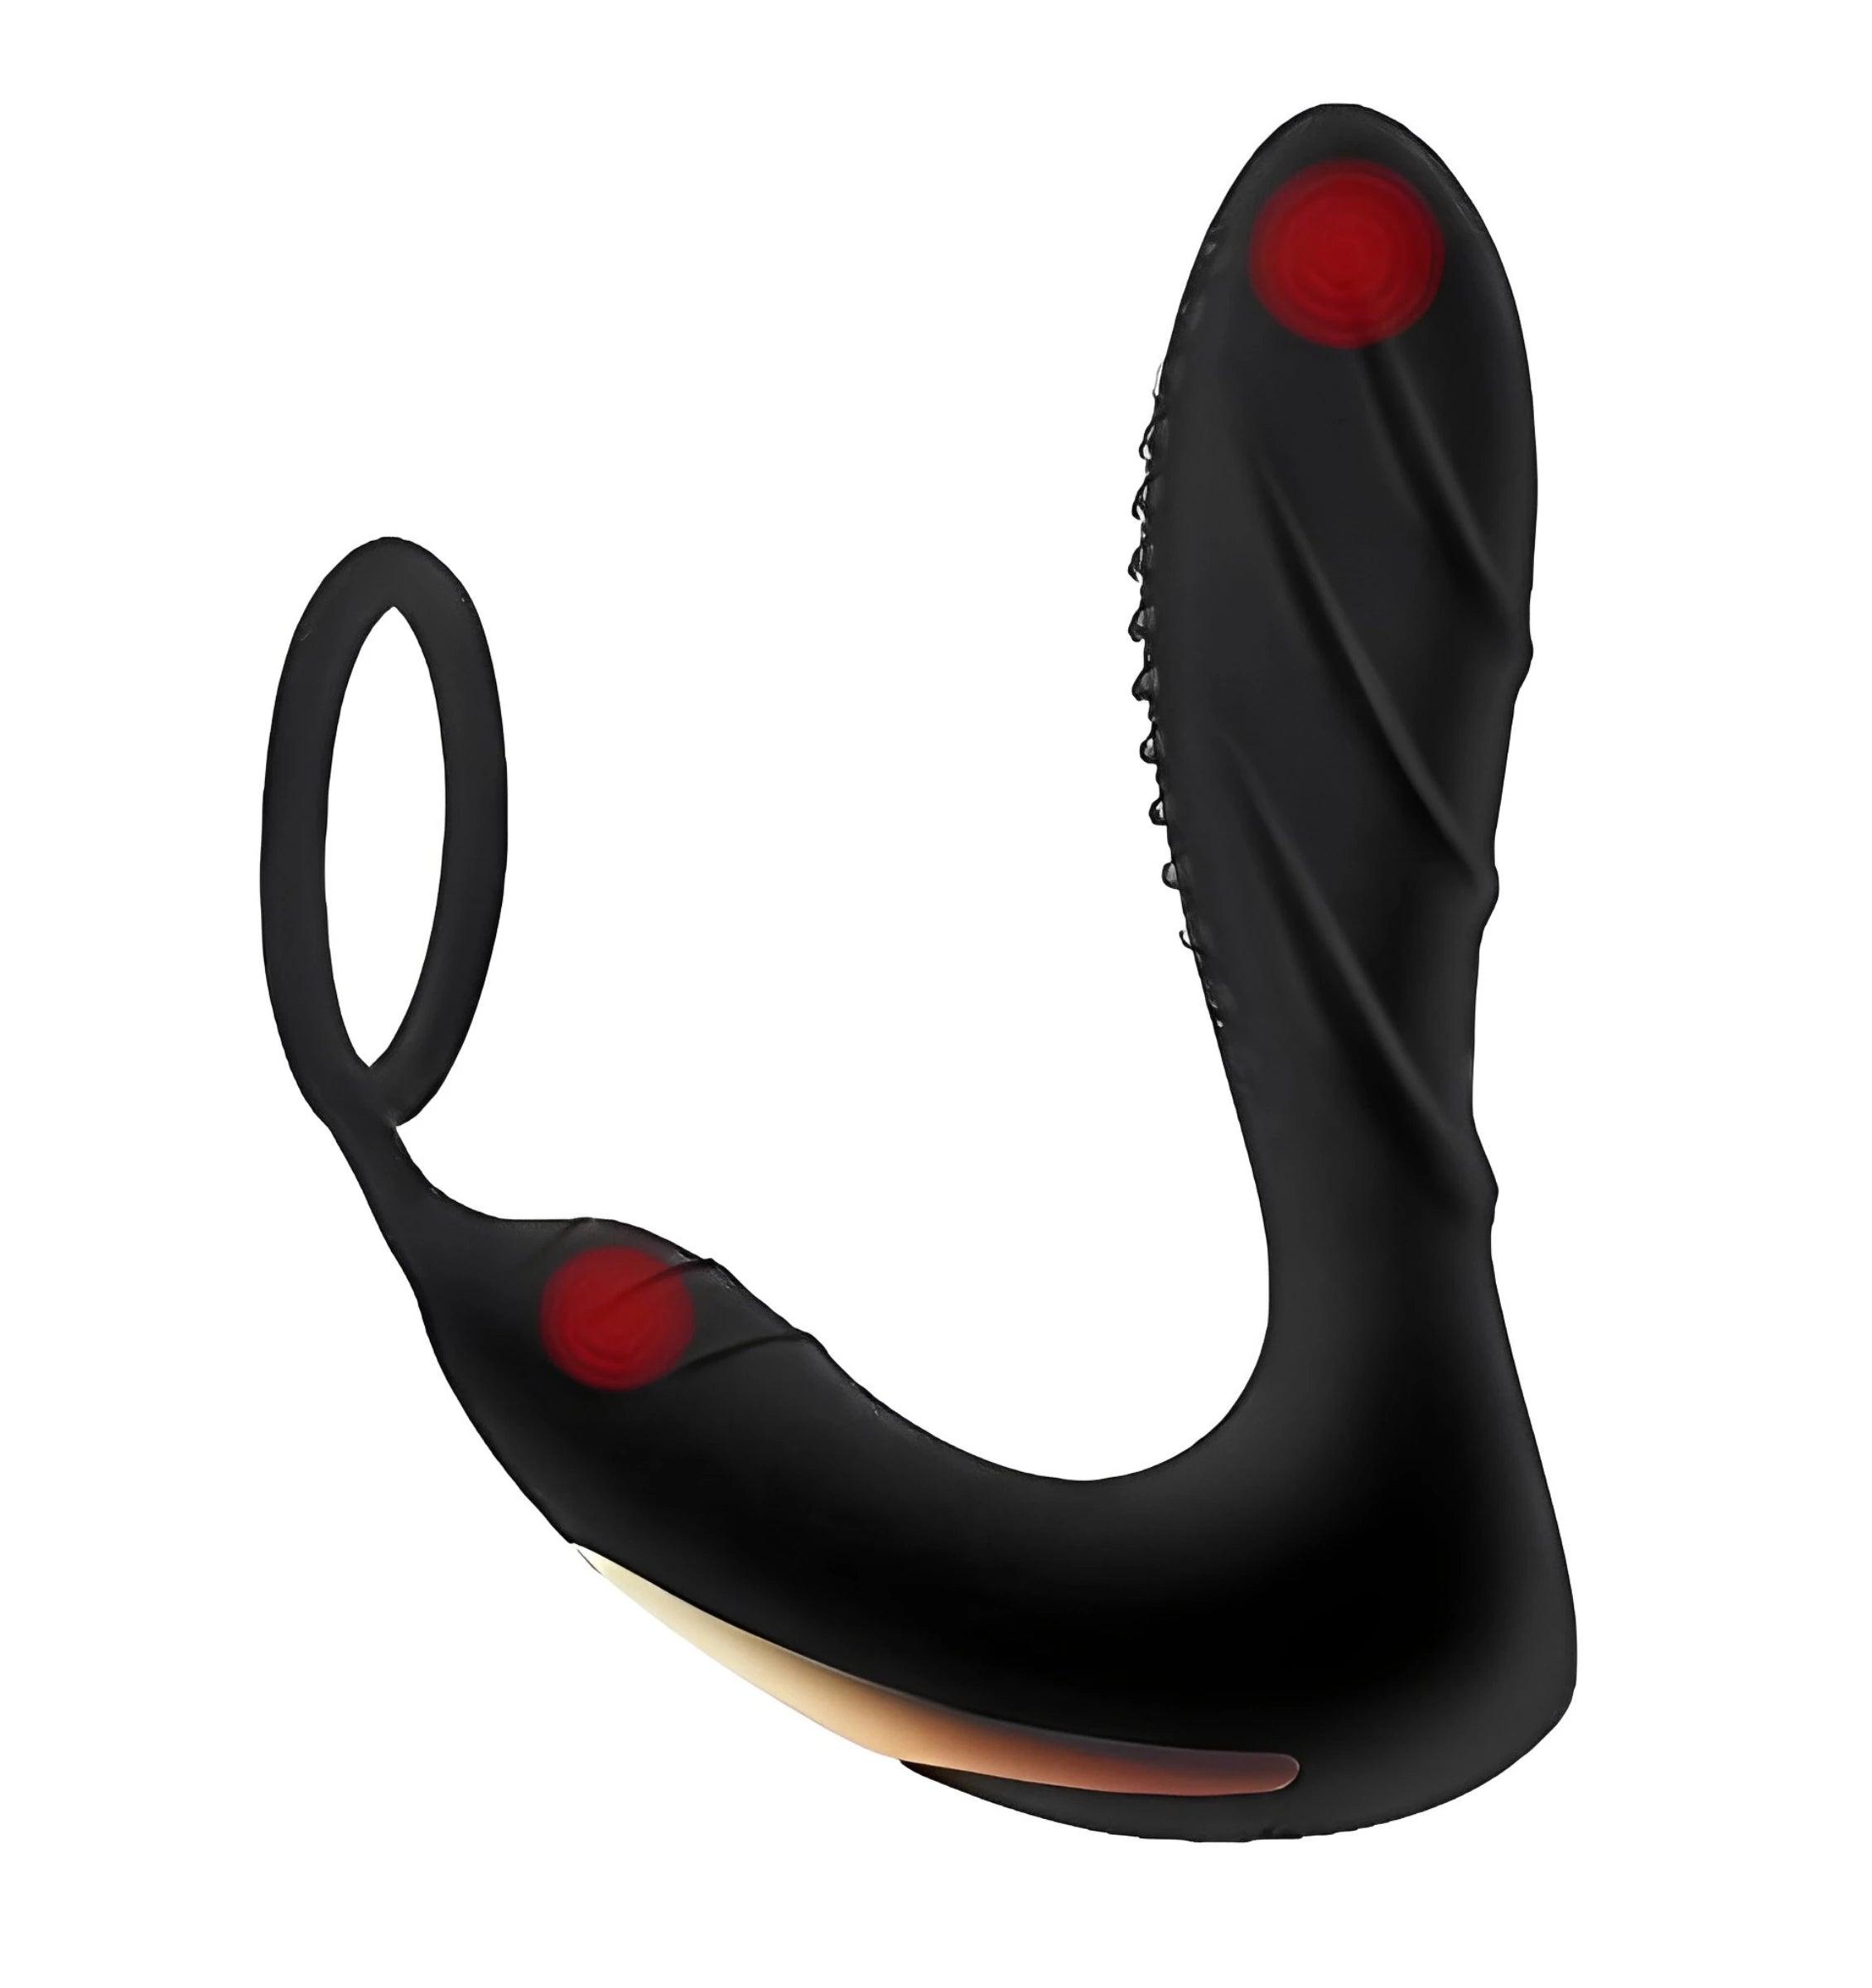 Remote Control 10 Vibrating Modes Cock Ring Prostate Massager - LUSTLOVER